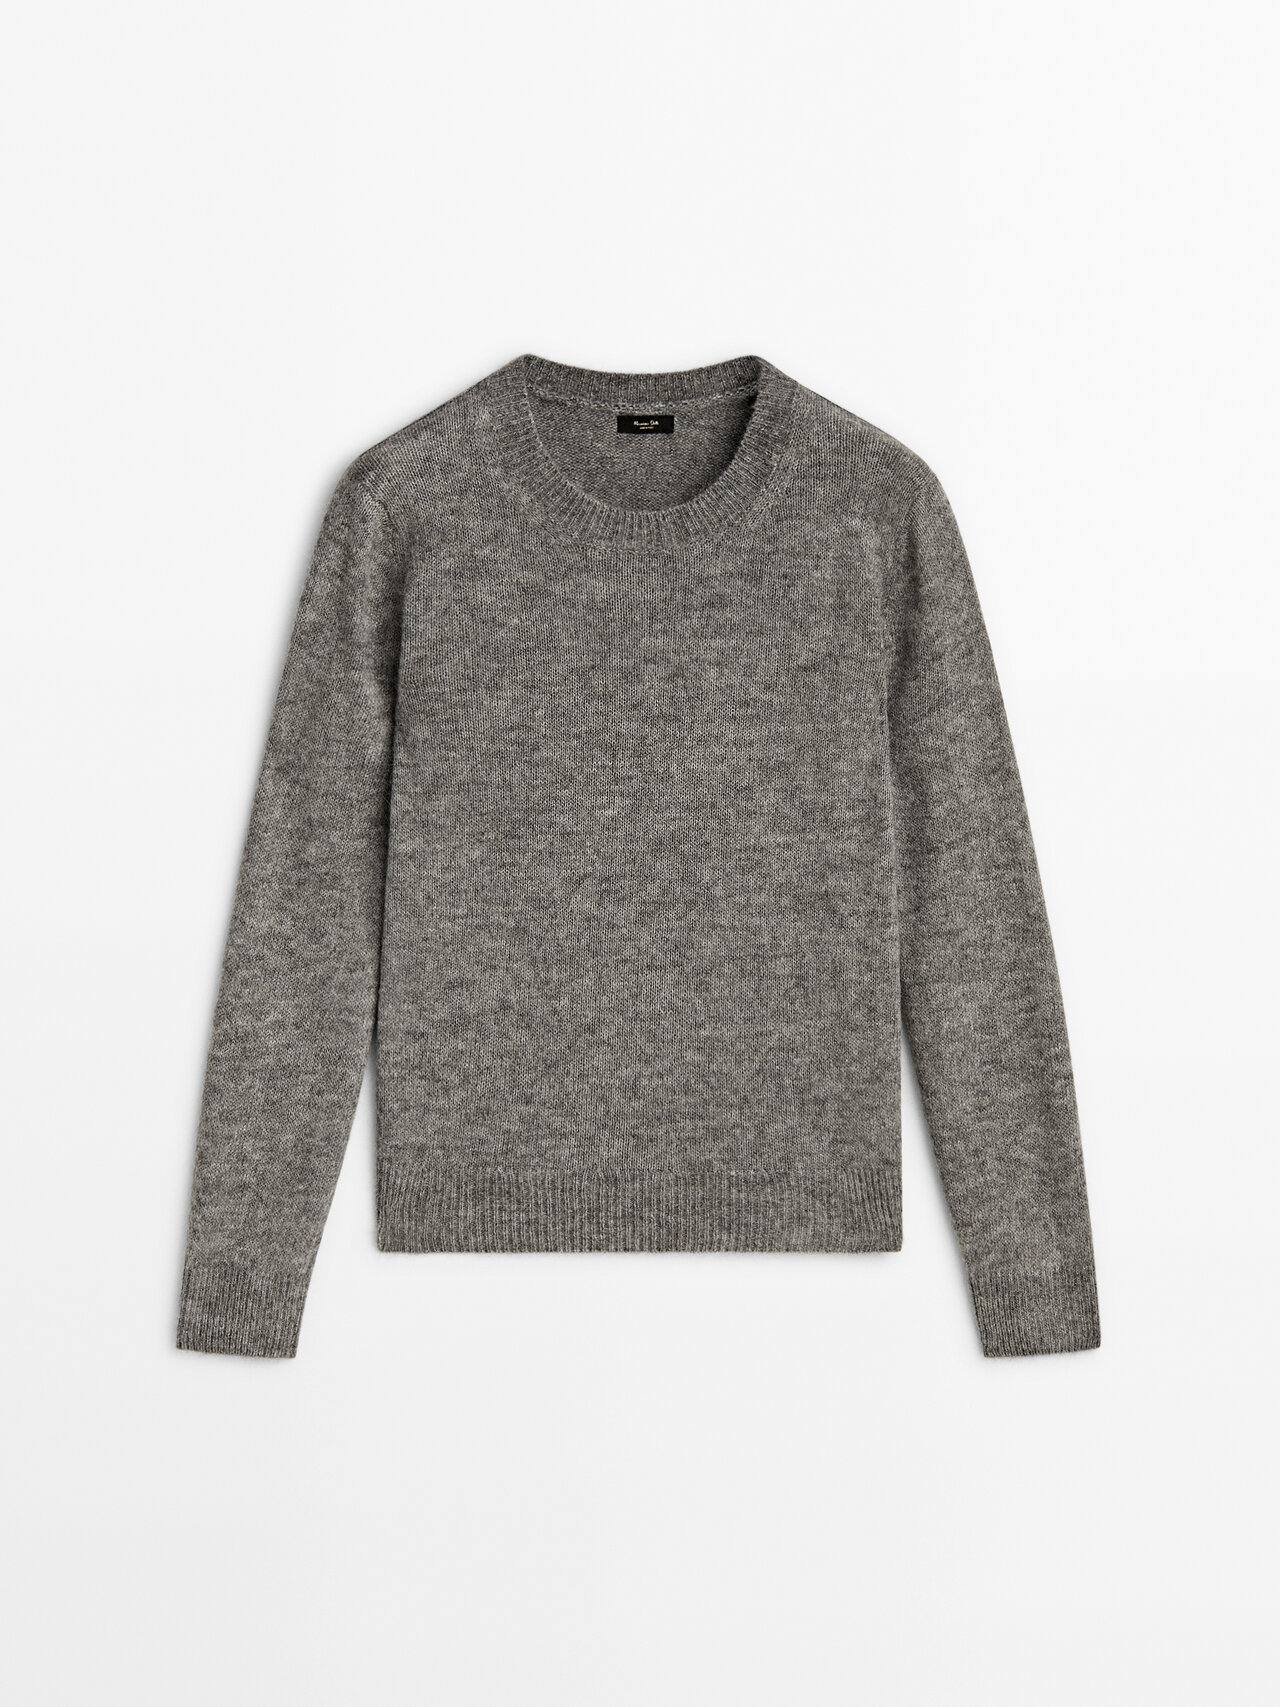 Massimo Dutti Crew Neck Knit Sweater In Grey Marl